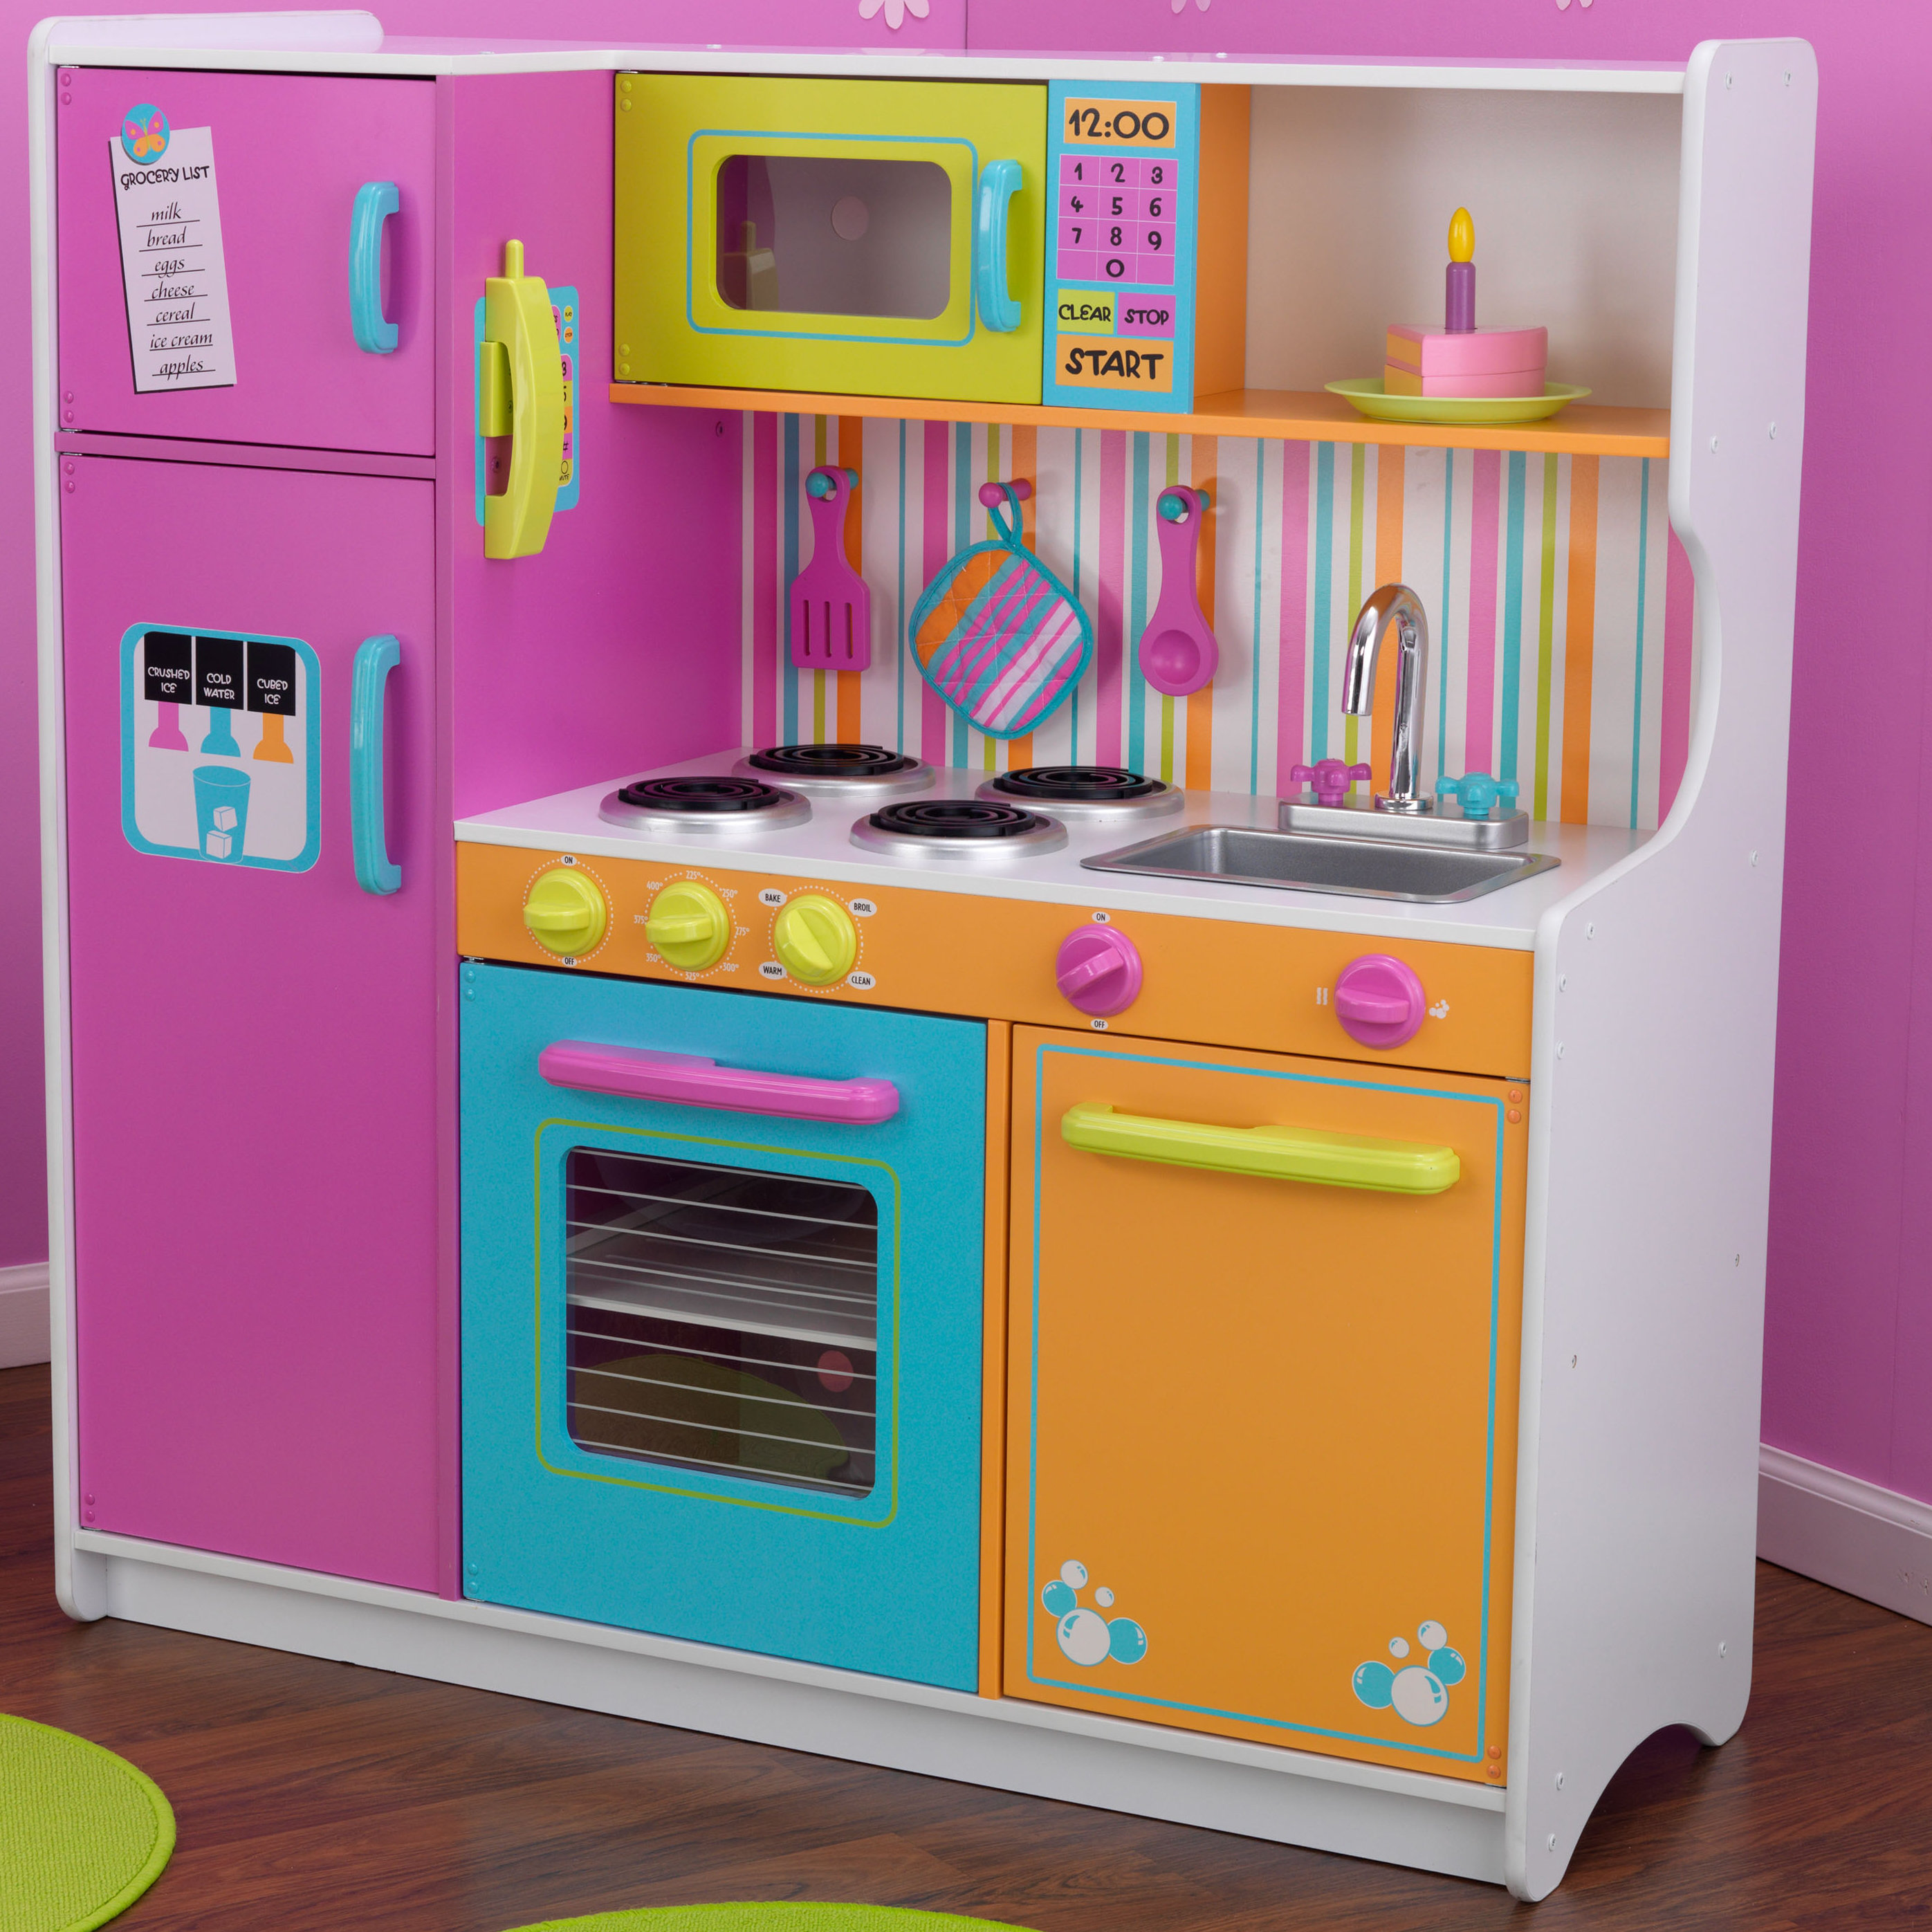 deluxe kitchen set